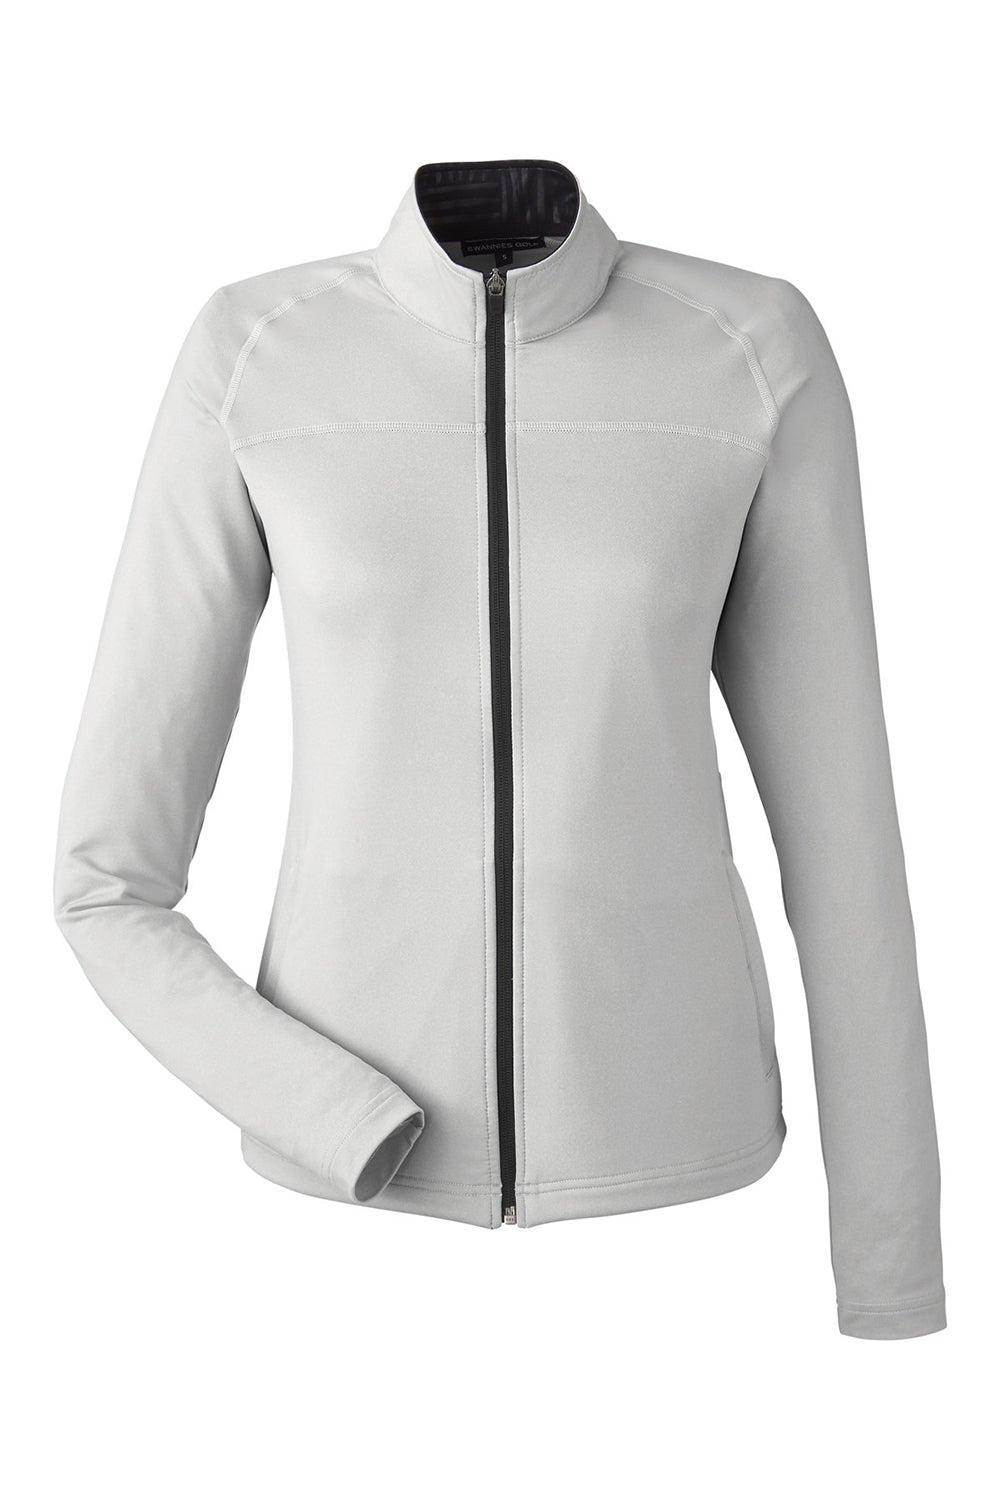 Swannies Golf SWF400L Womens Cora Full Zip Jacket Glacier Grey Flat Front